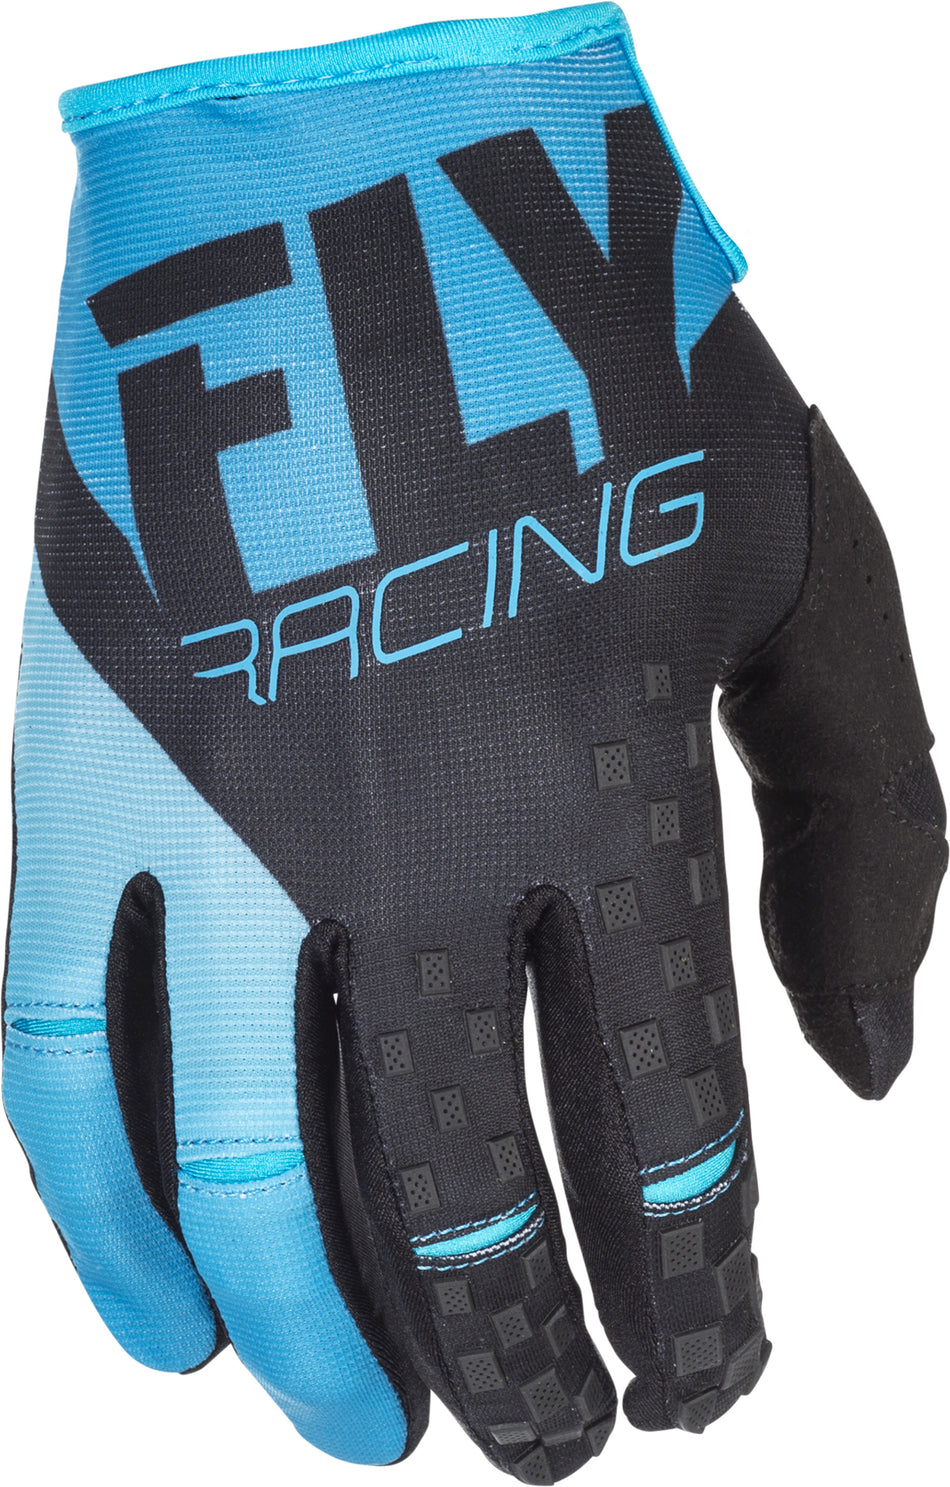 FLY RACING Kinetic Gloves Blue/Black Sz 6 371-41106